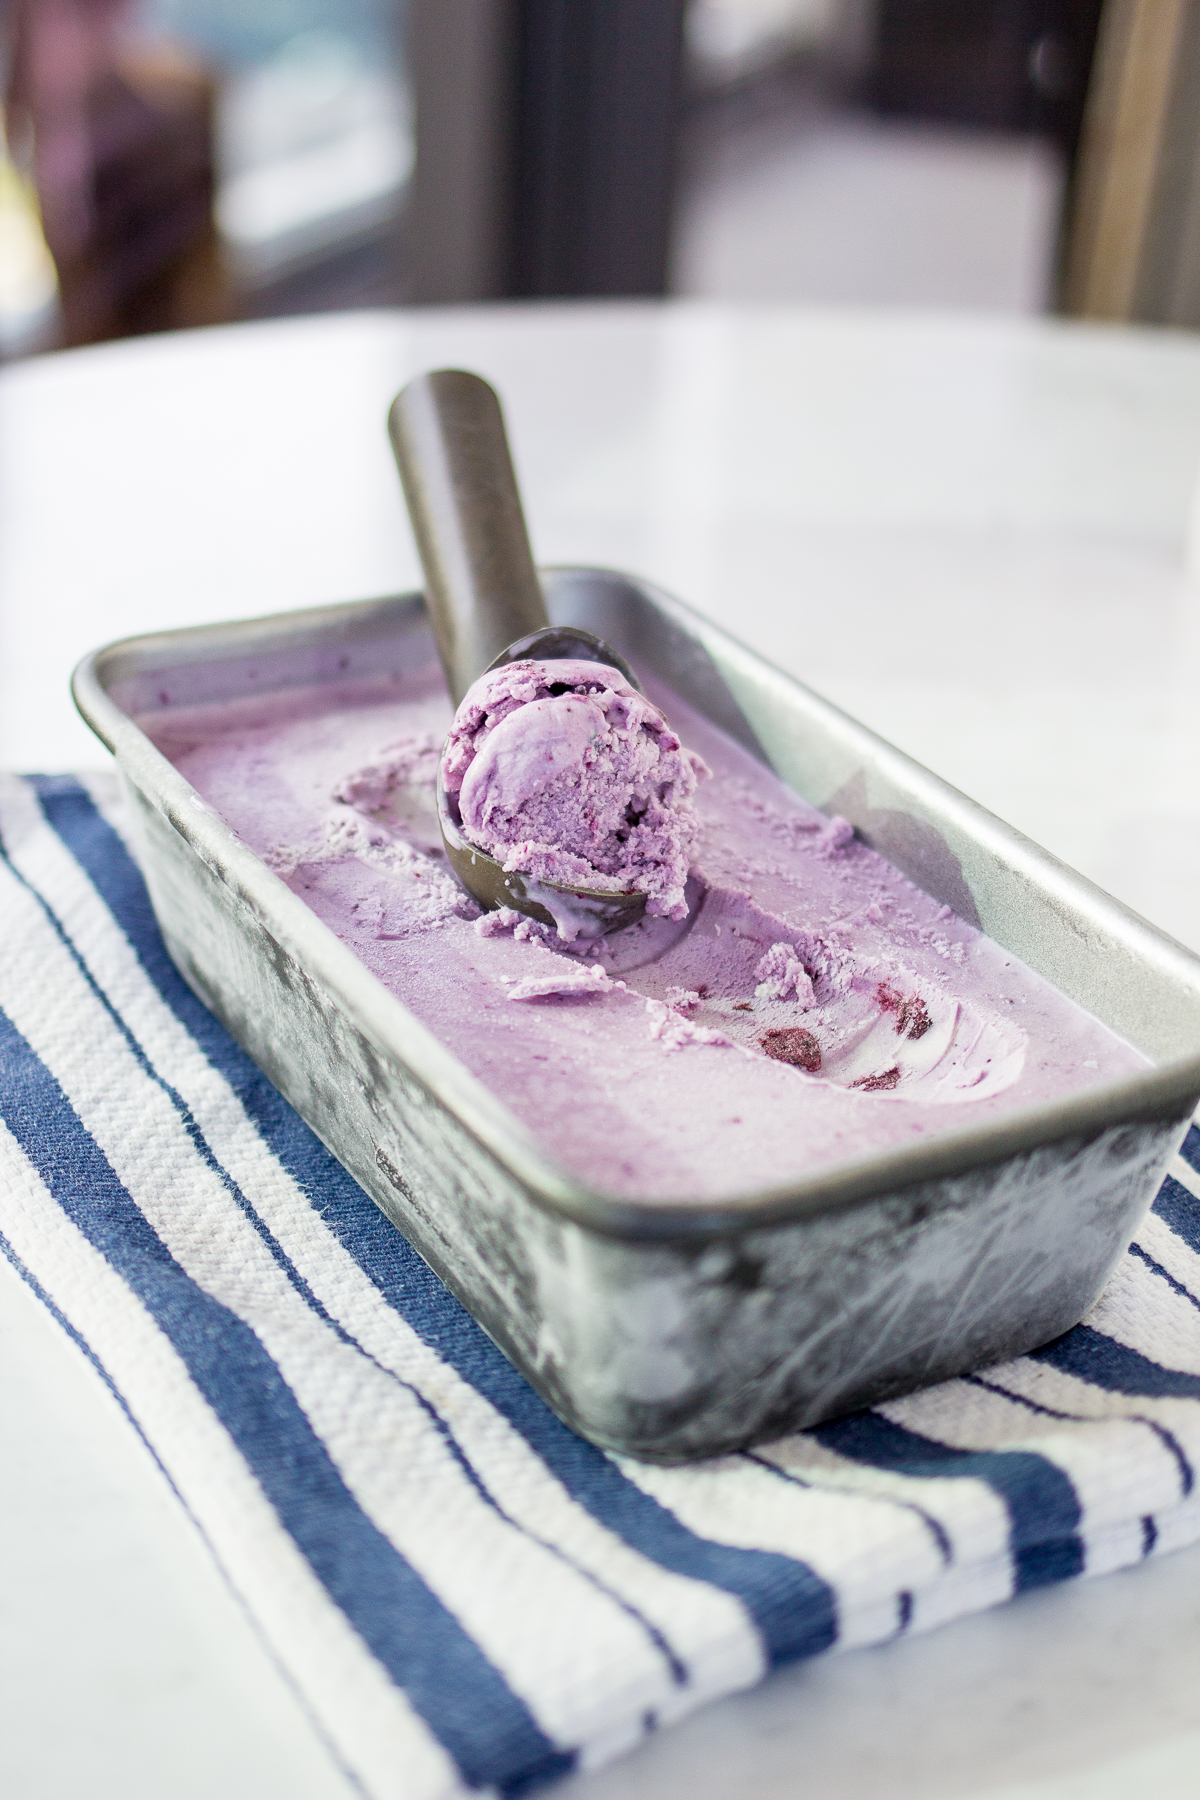 Goat Cheese & Blueberry Ice Cream — via @TheFoxandShe